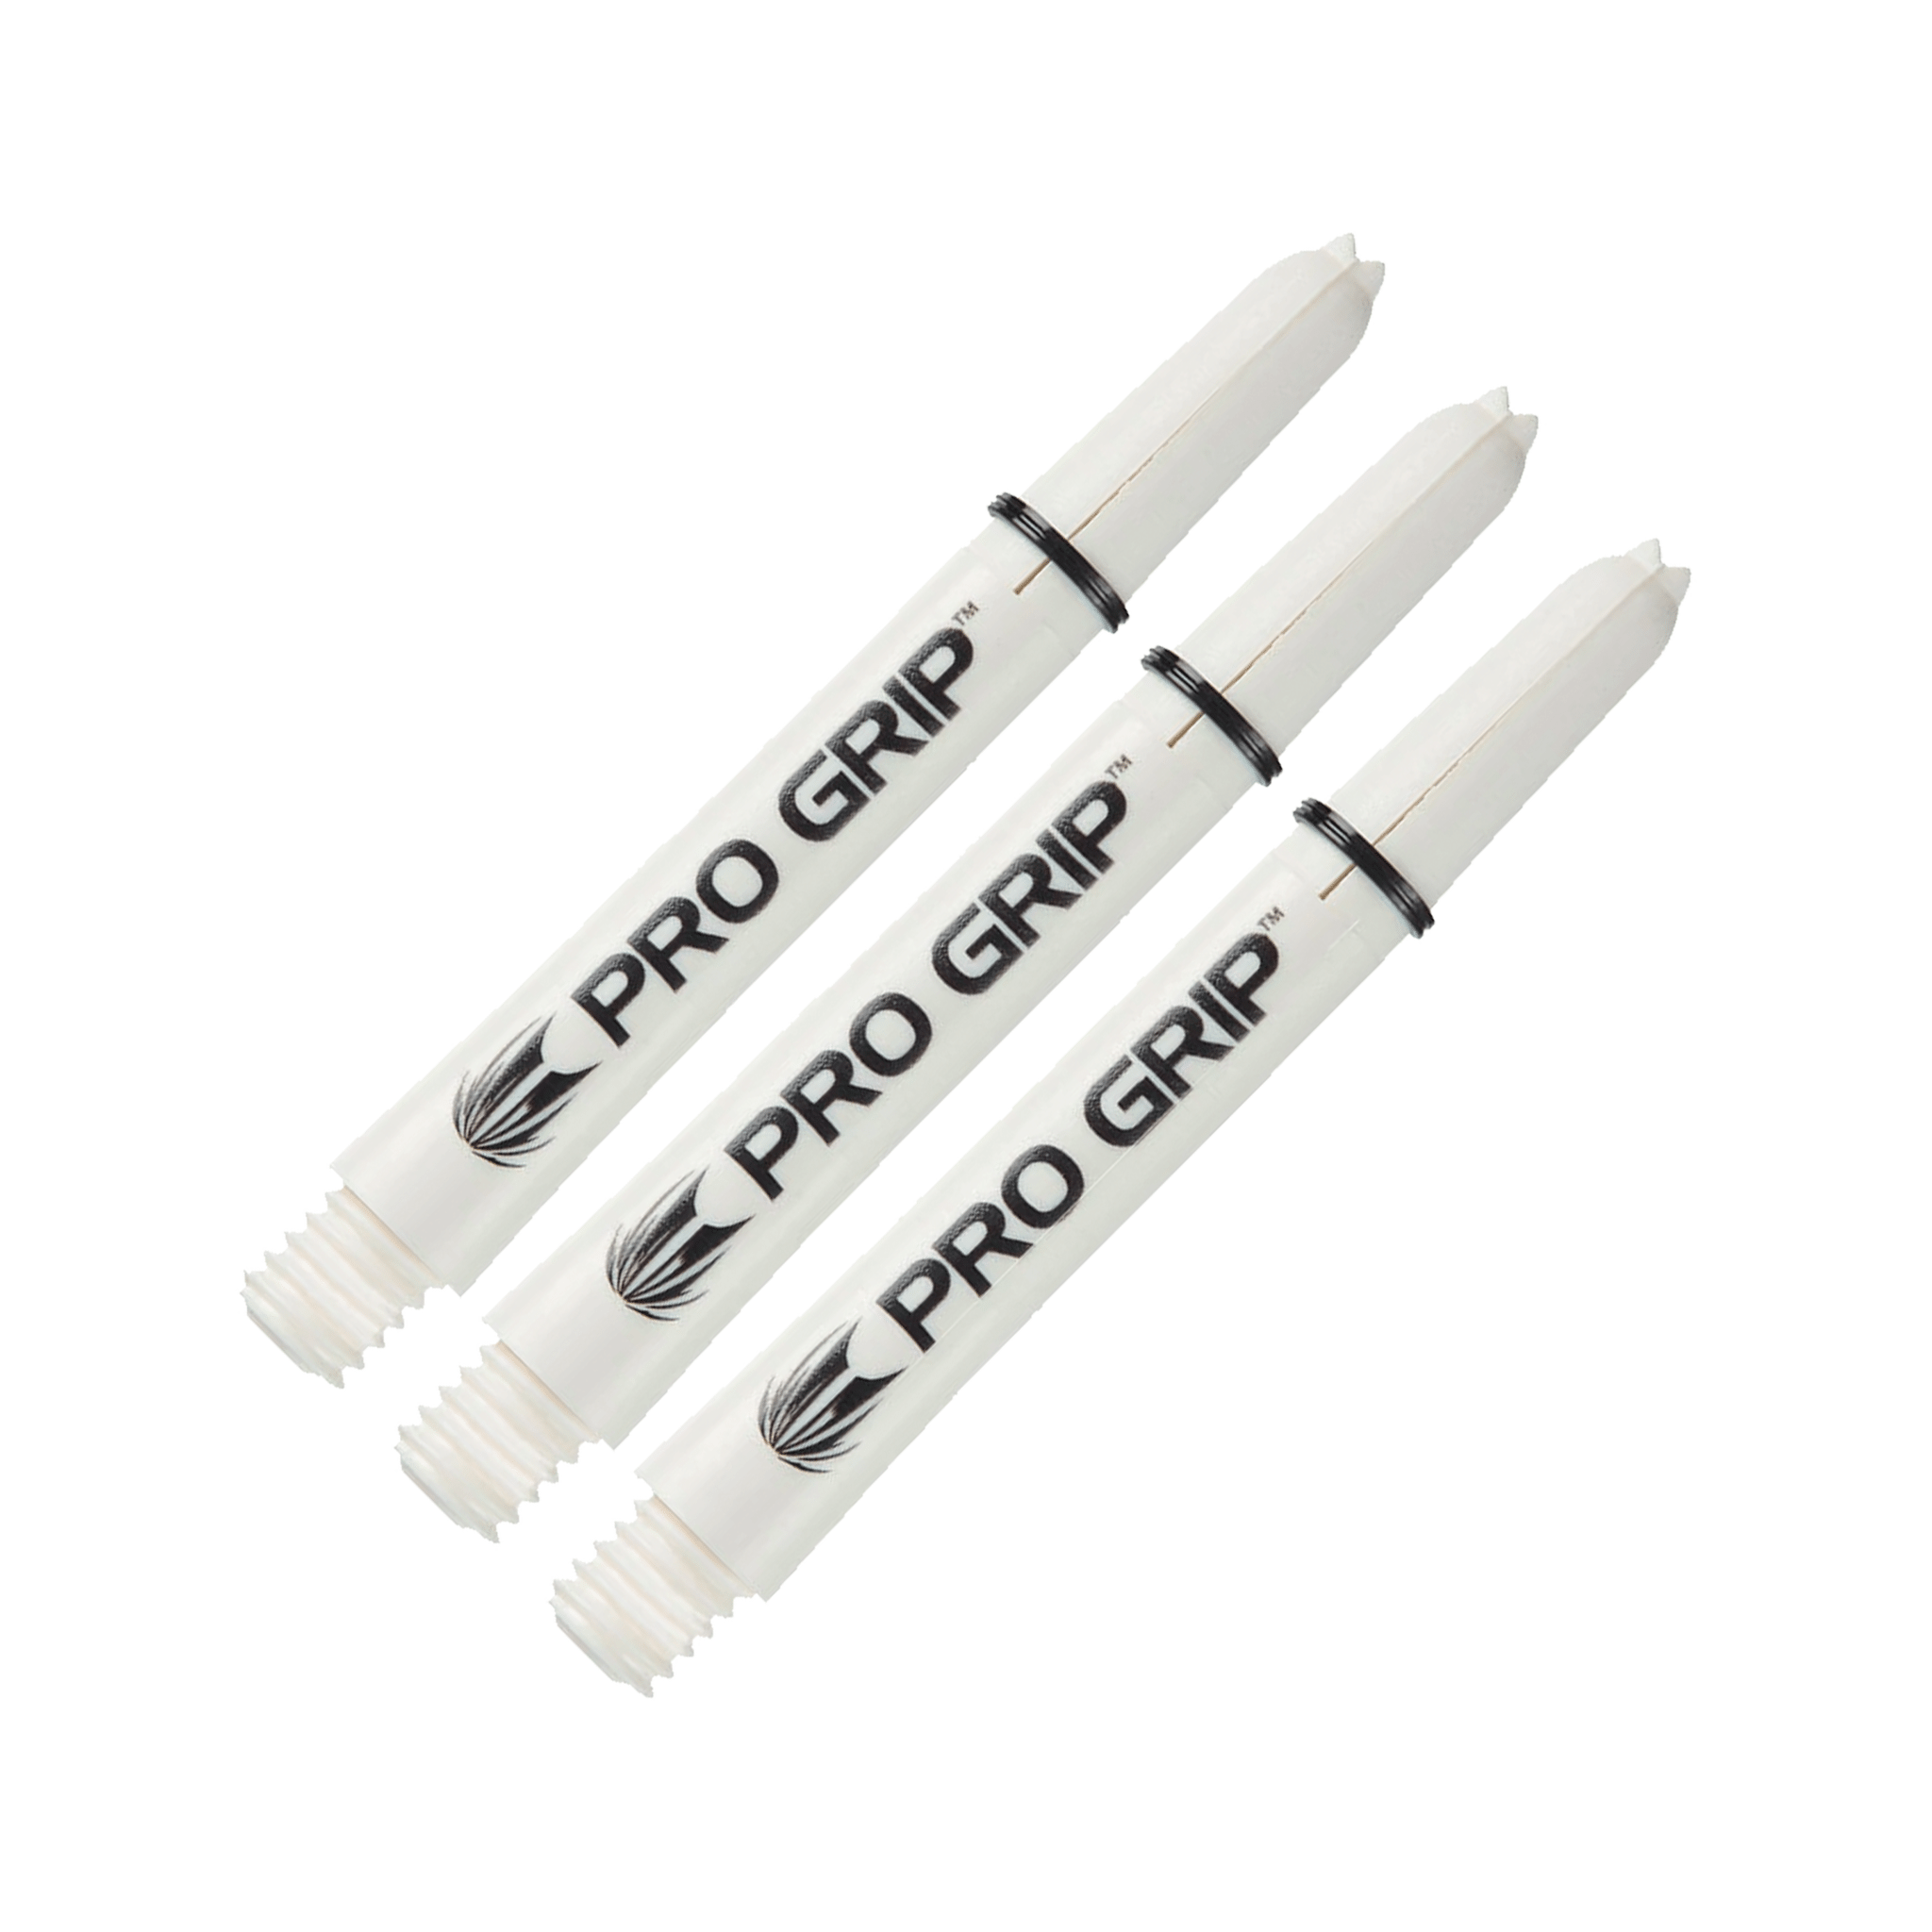 Target Pro Grip Multi Pack - Nylon Dart Shafts (3 Sets) White / Intermediate (41mm) Shafts